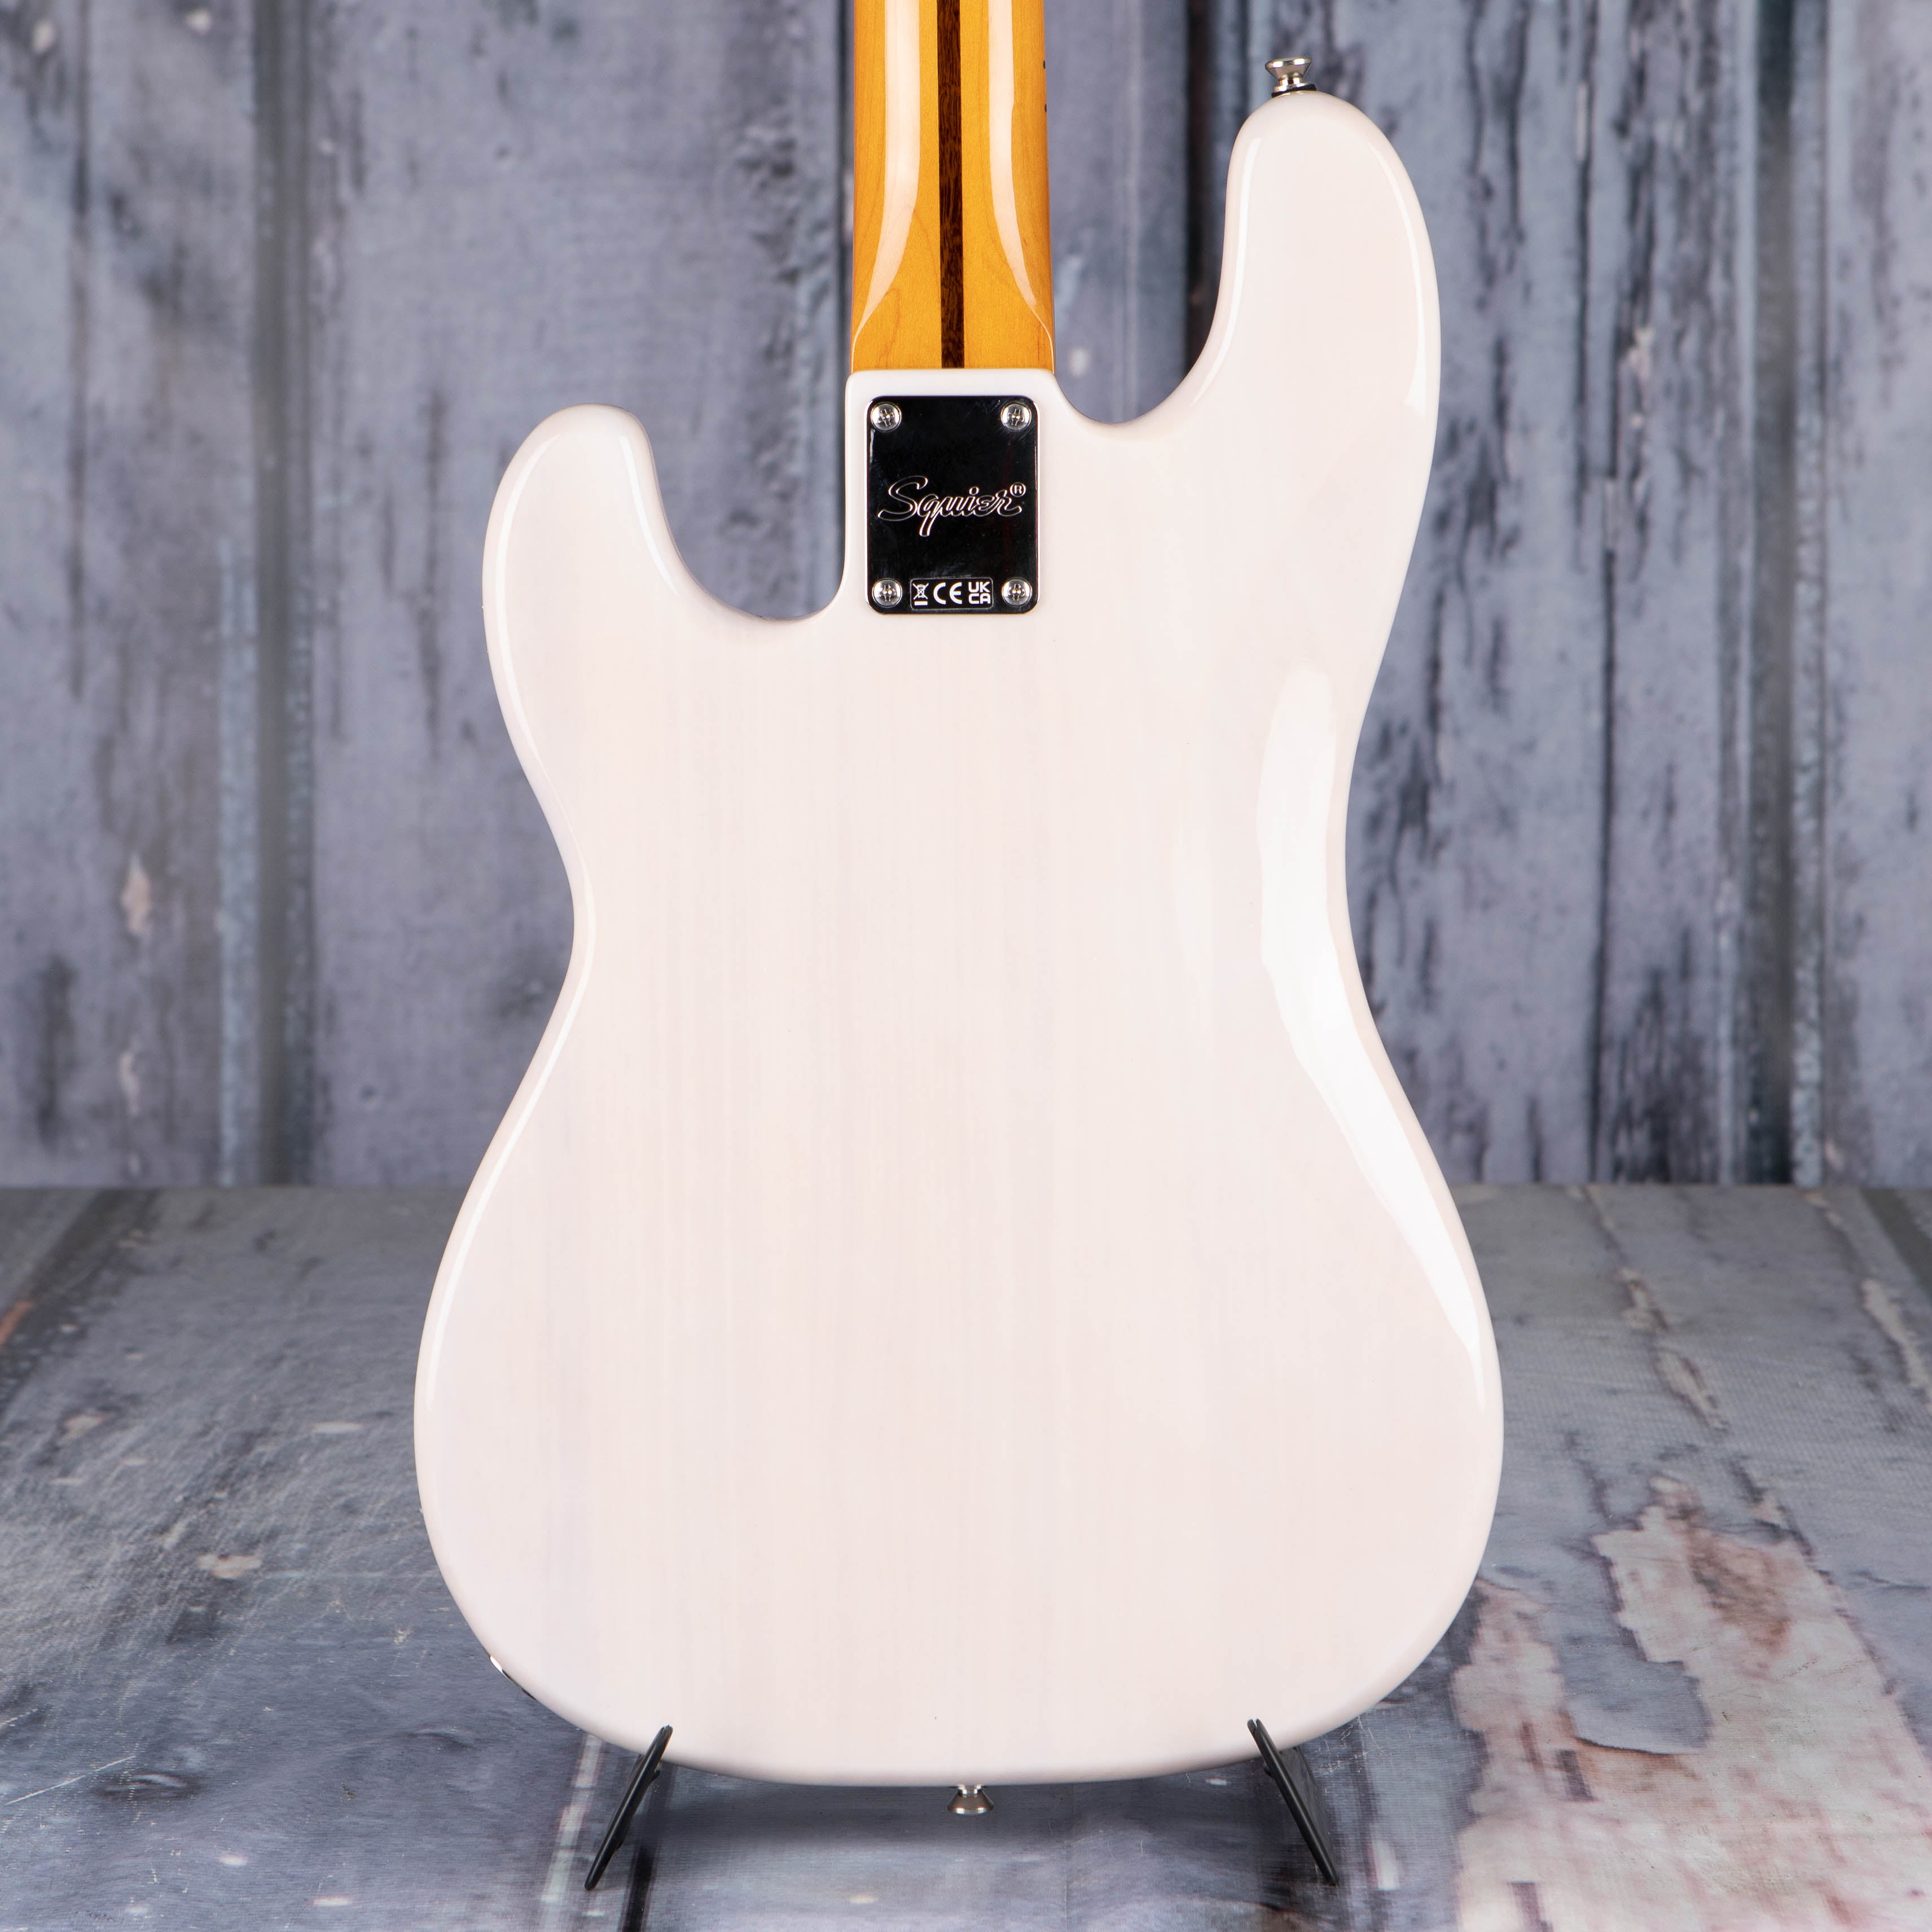 Squier Classic Vibe '50s Precision Bass Guitar, White Blonde, back closeup